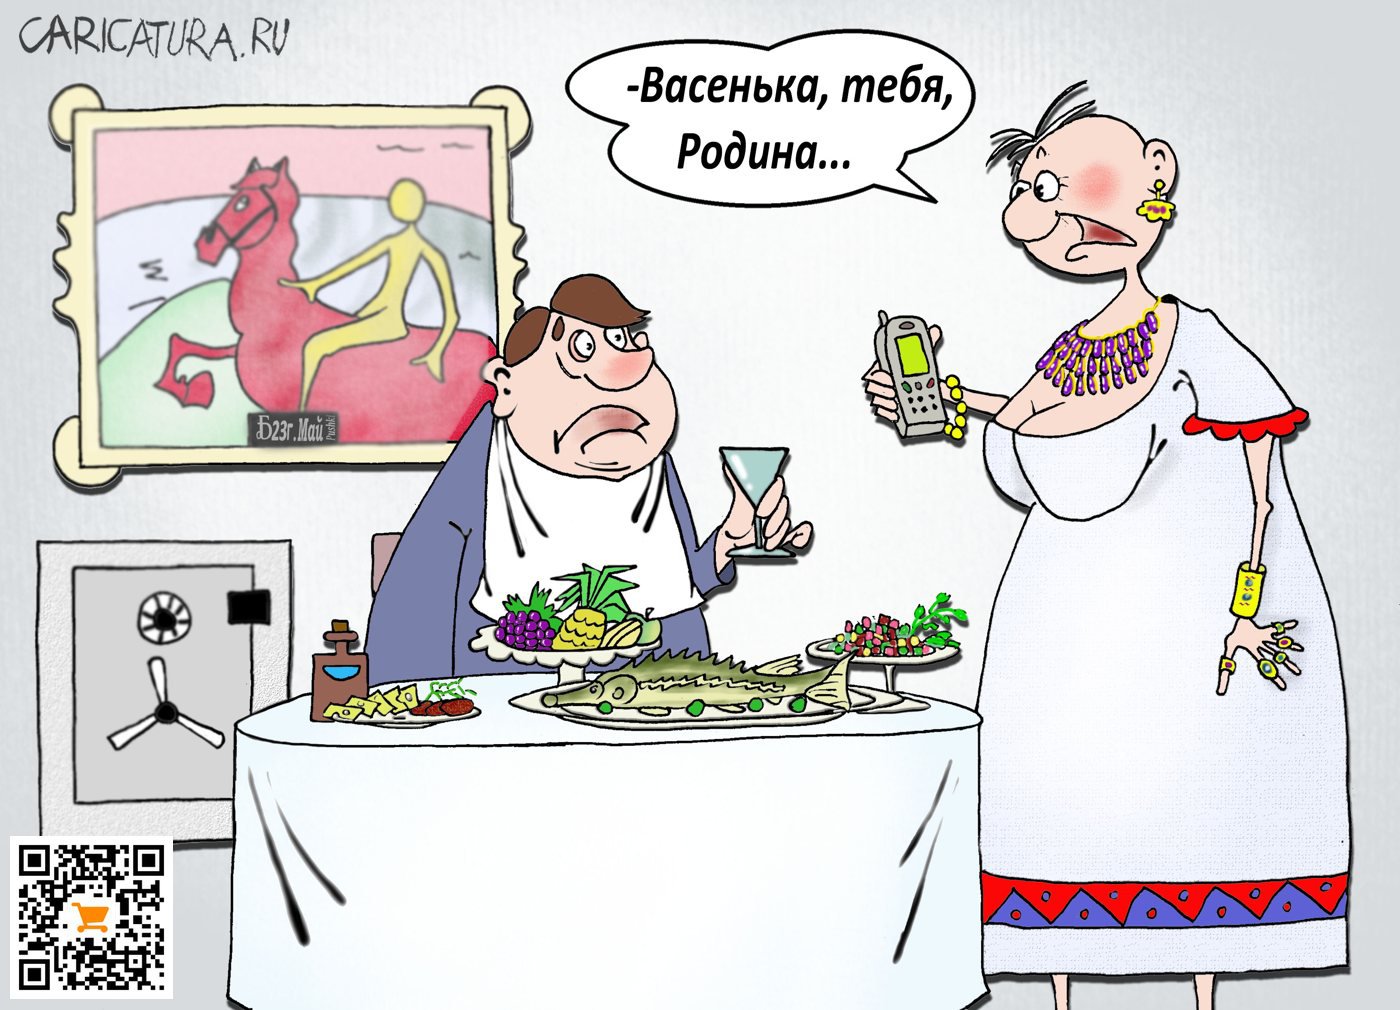 Карикатура "ПроРодину", Борис Демин